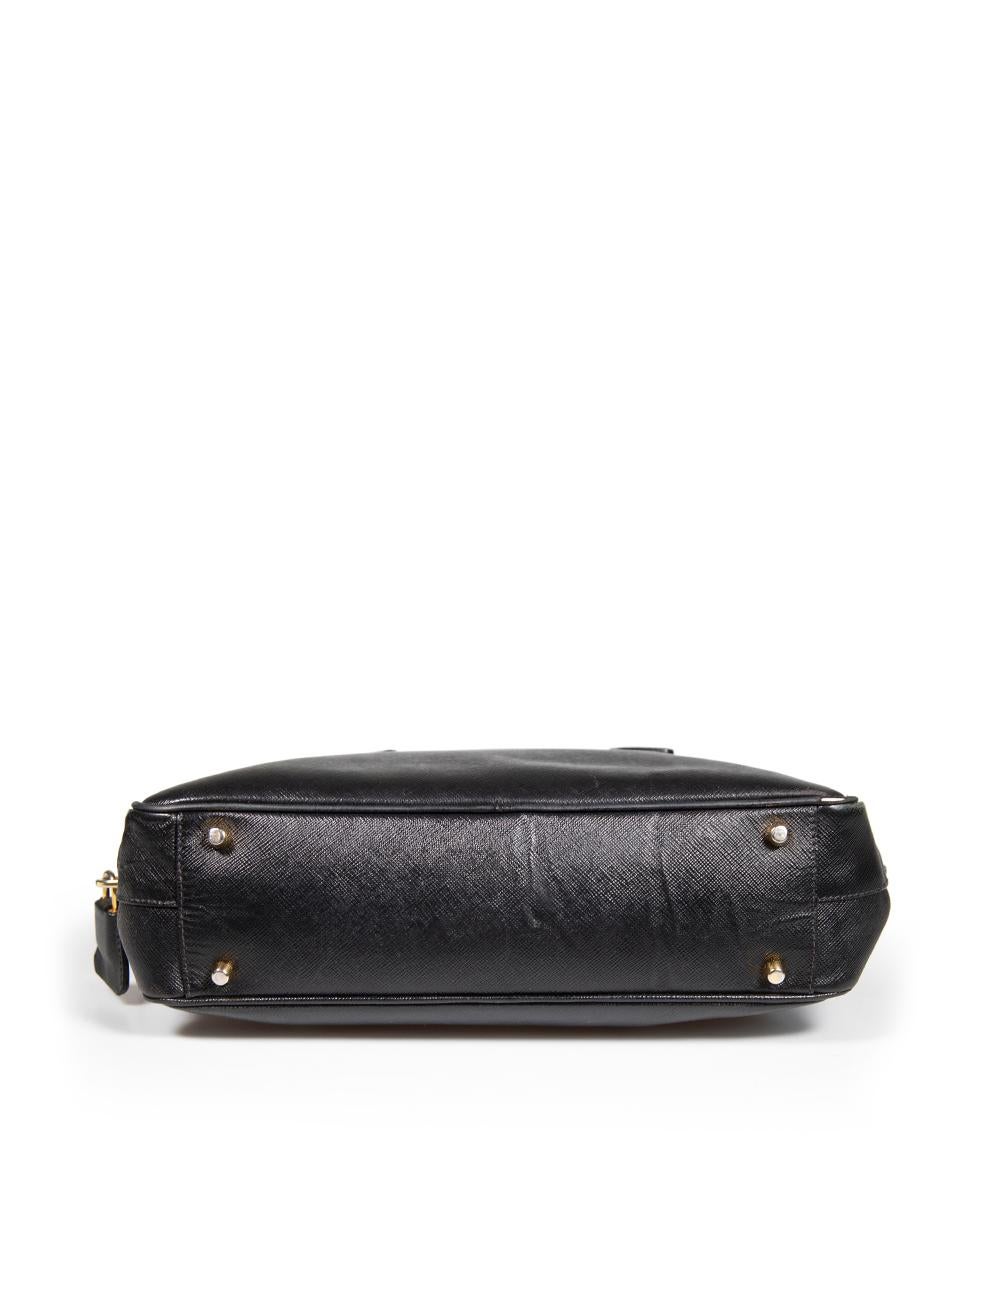 Women's Prada Black Saffiano Leather Bauletto Bag For Sale